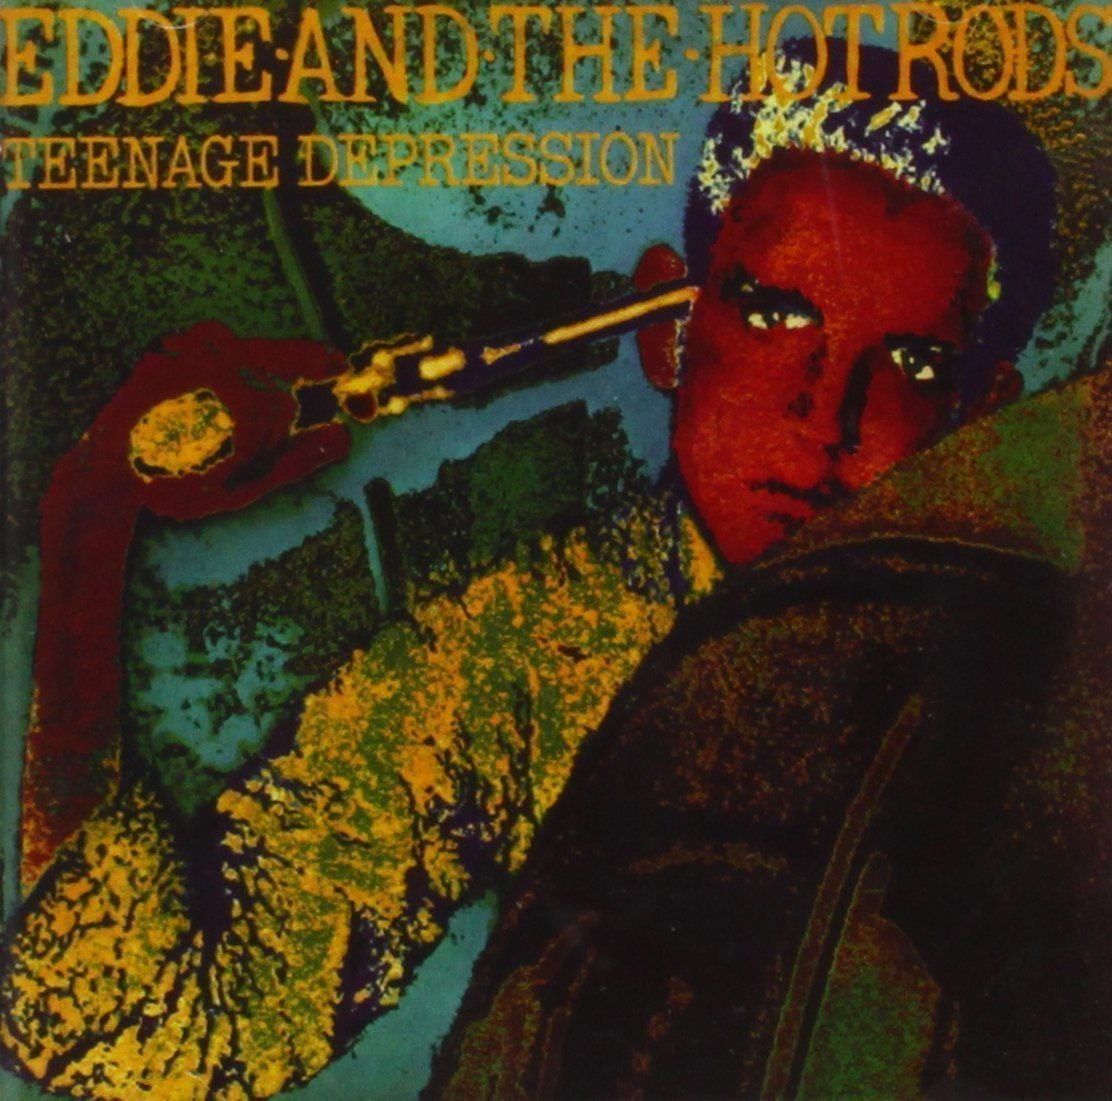 Hanglemez Eddie And The Hot Rods - Teenage Depression (LP)